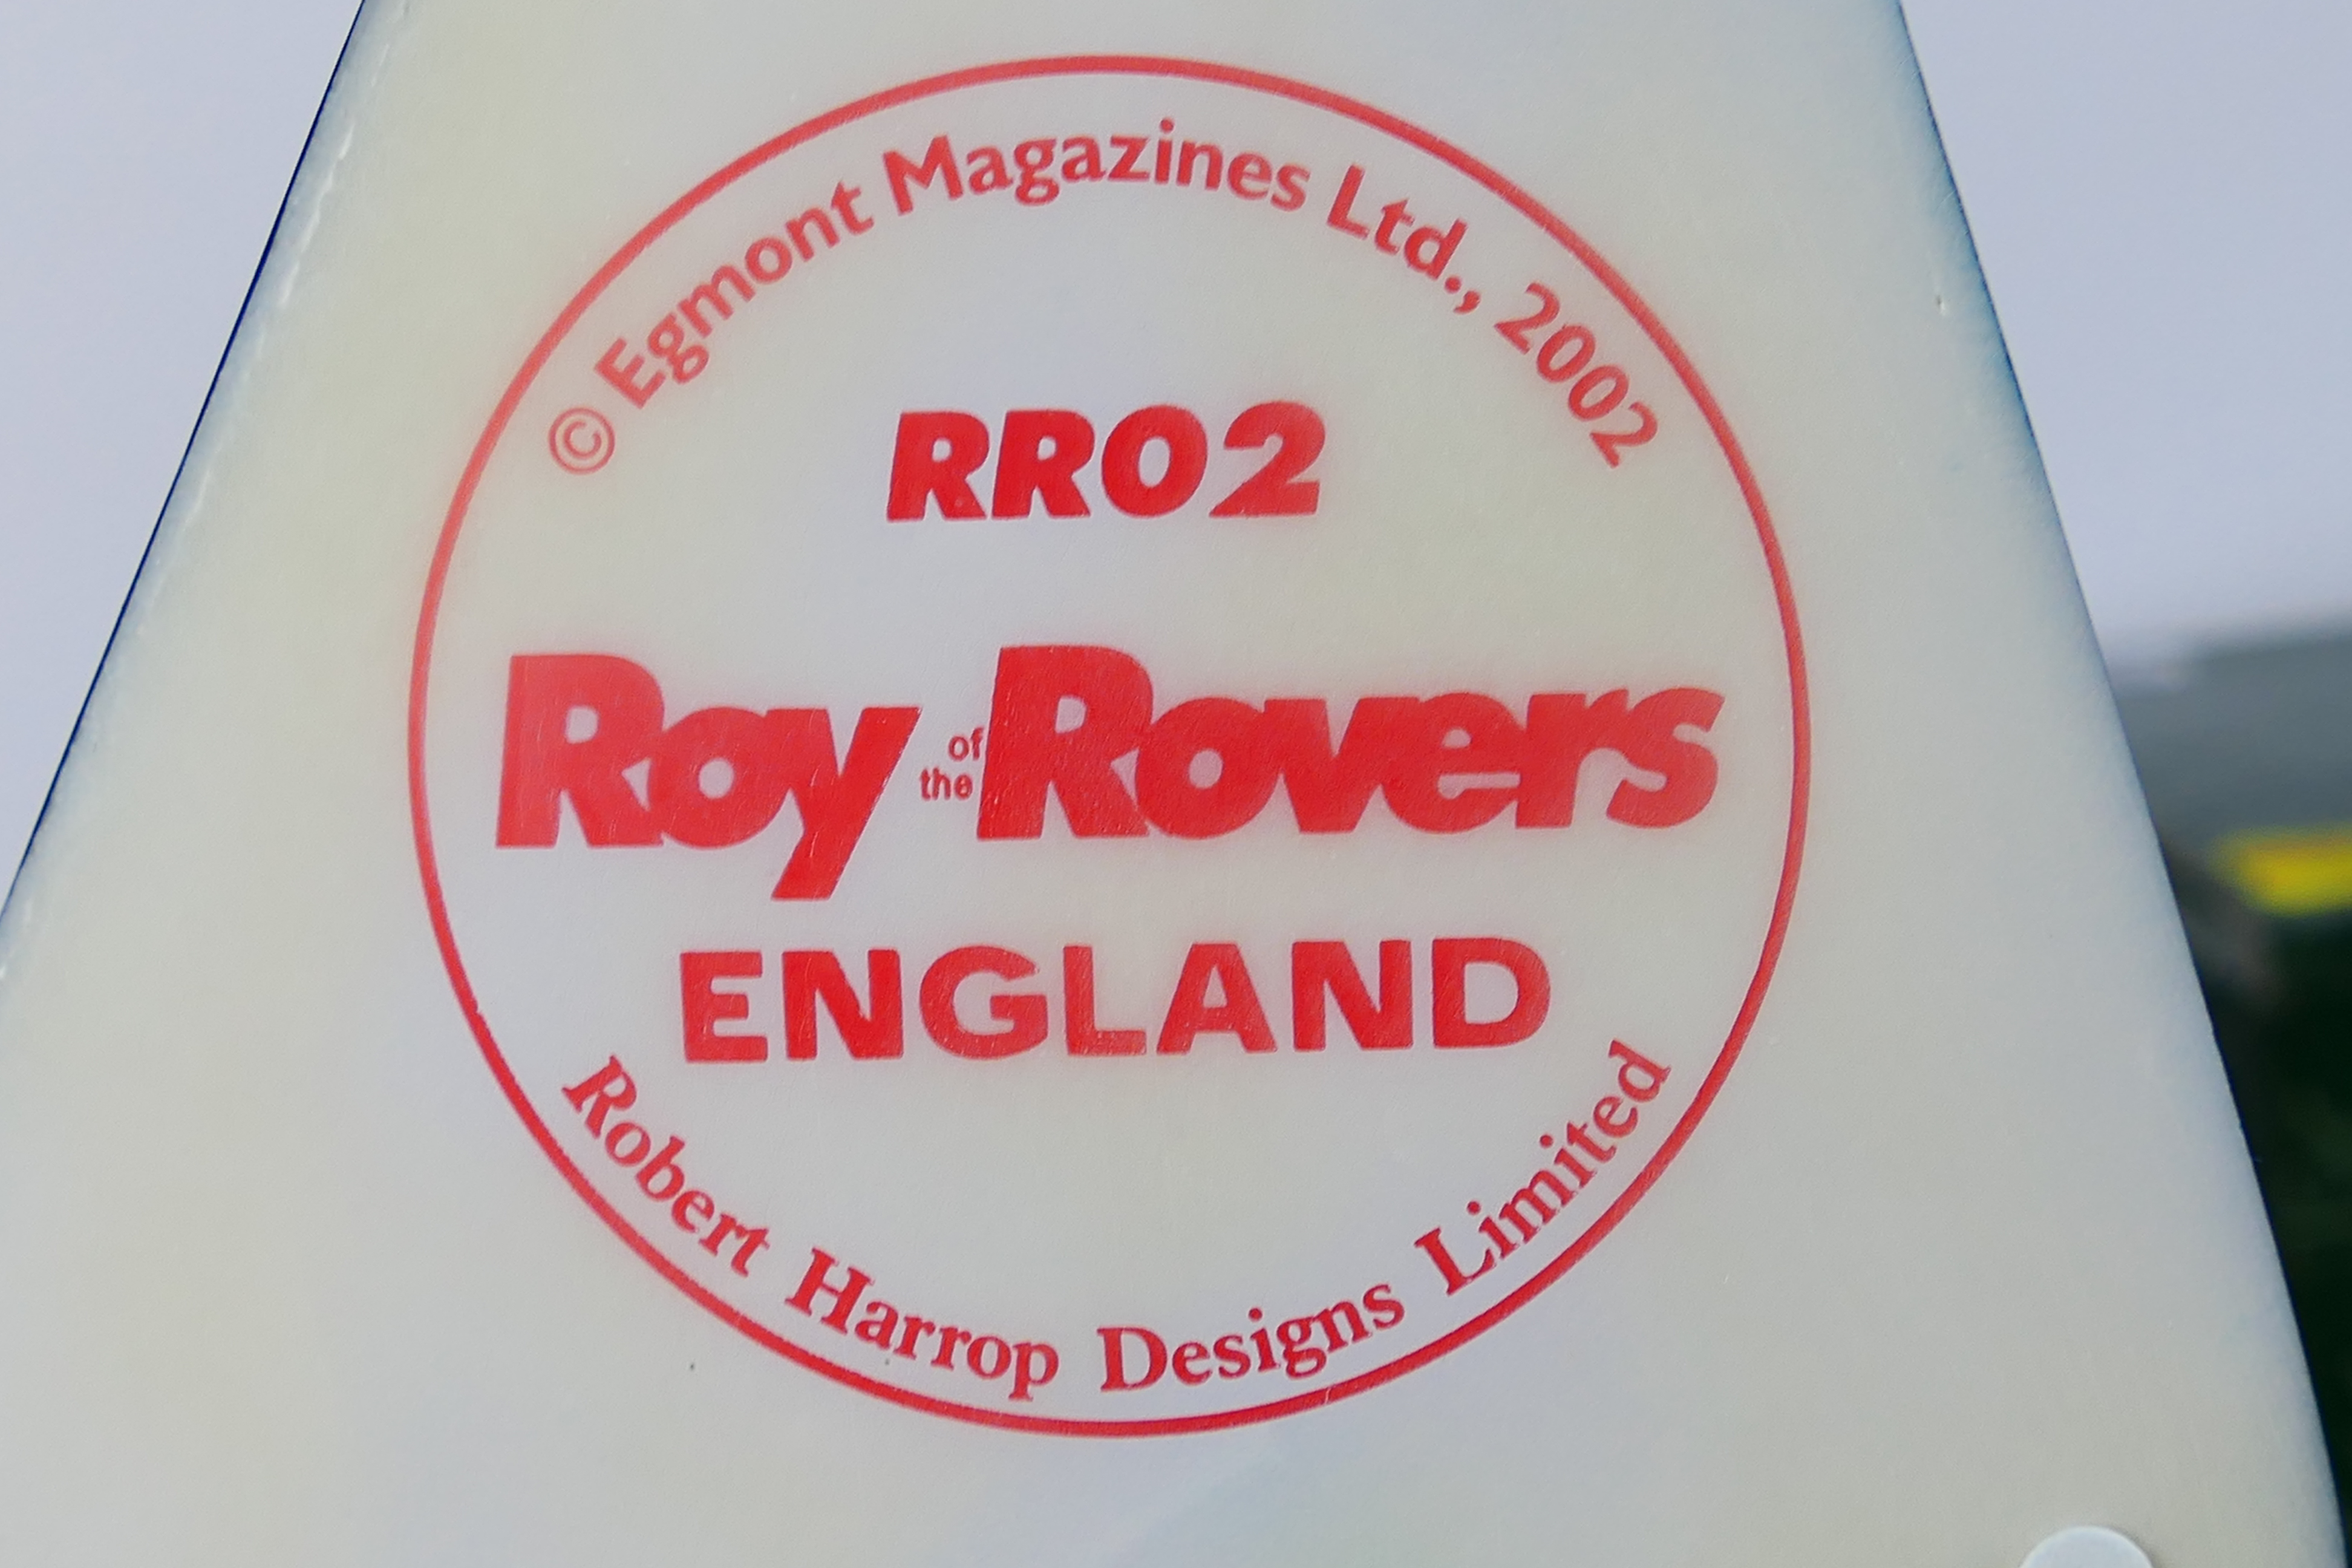 Robert Harrop - Roy of the Rovers - A pair of Robert Harrop resin figurine of 1990's(RR01) and - Image 8 of 9